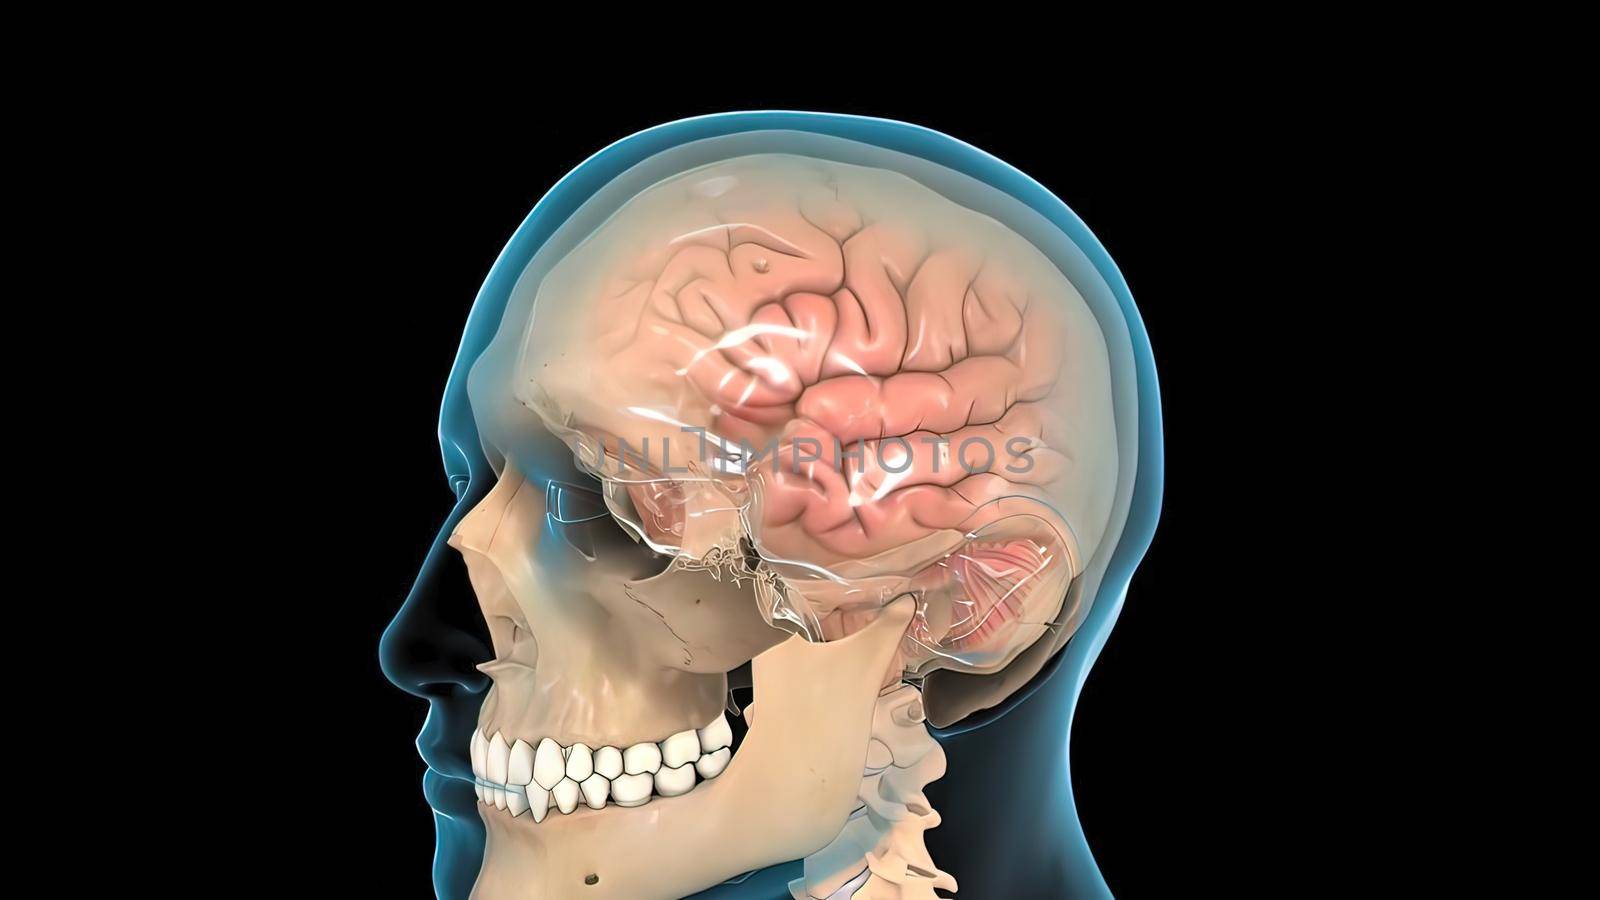 Male medical brain scan in cycle (temporal lobe, parietal lobe) 3D illustration